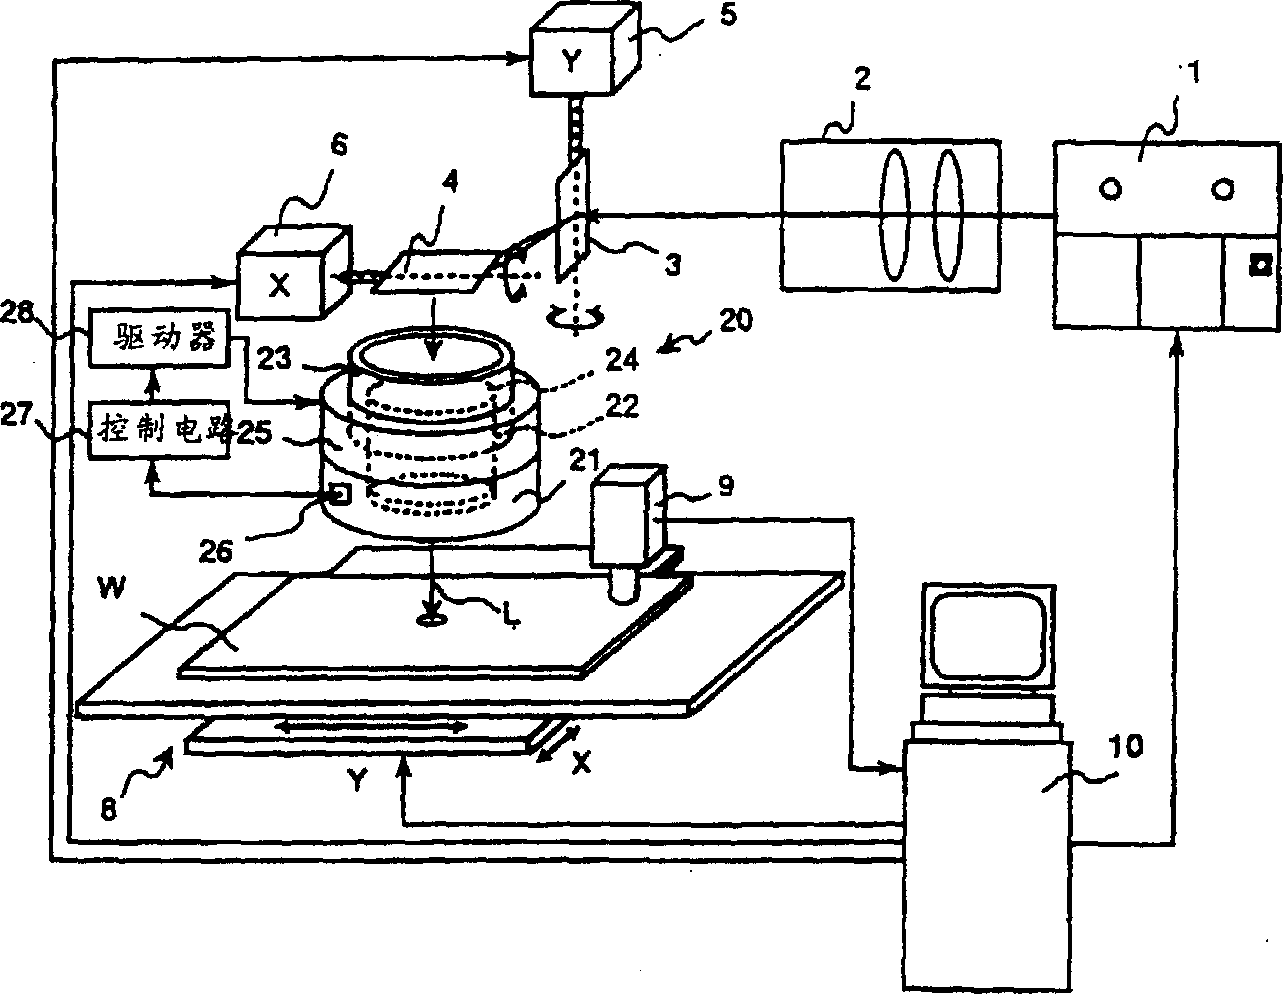 Laser machining apparatus